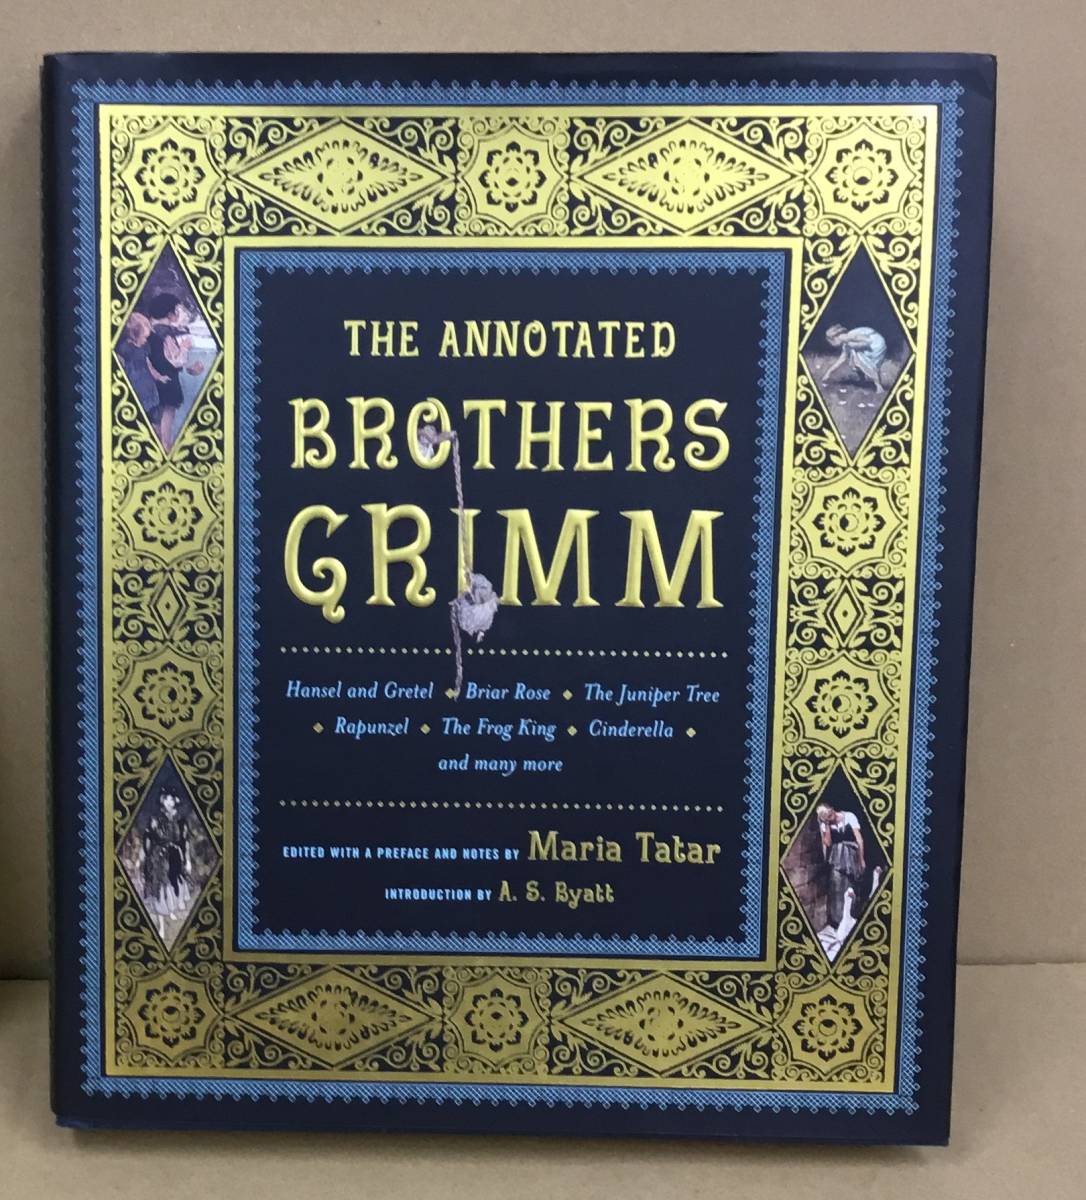 K1207-12 The Annotated Brothers Grimm(挿画注解版 グリム童話集) Maria tatar(マリア・タタール) 2004年の画像1